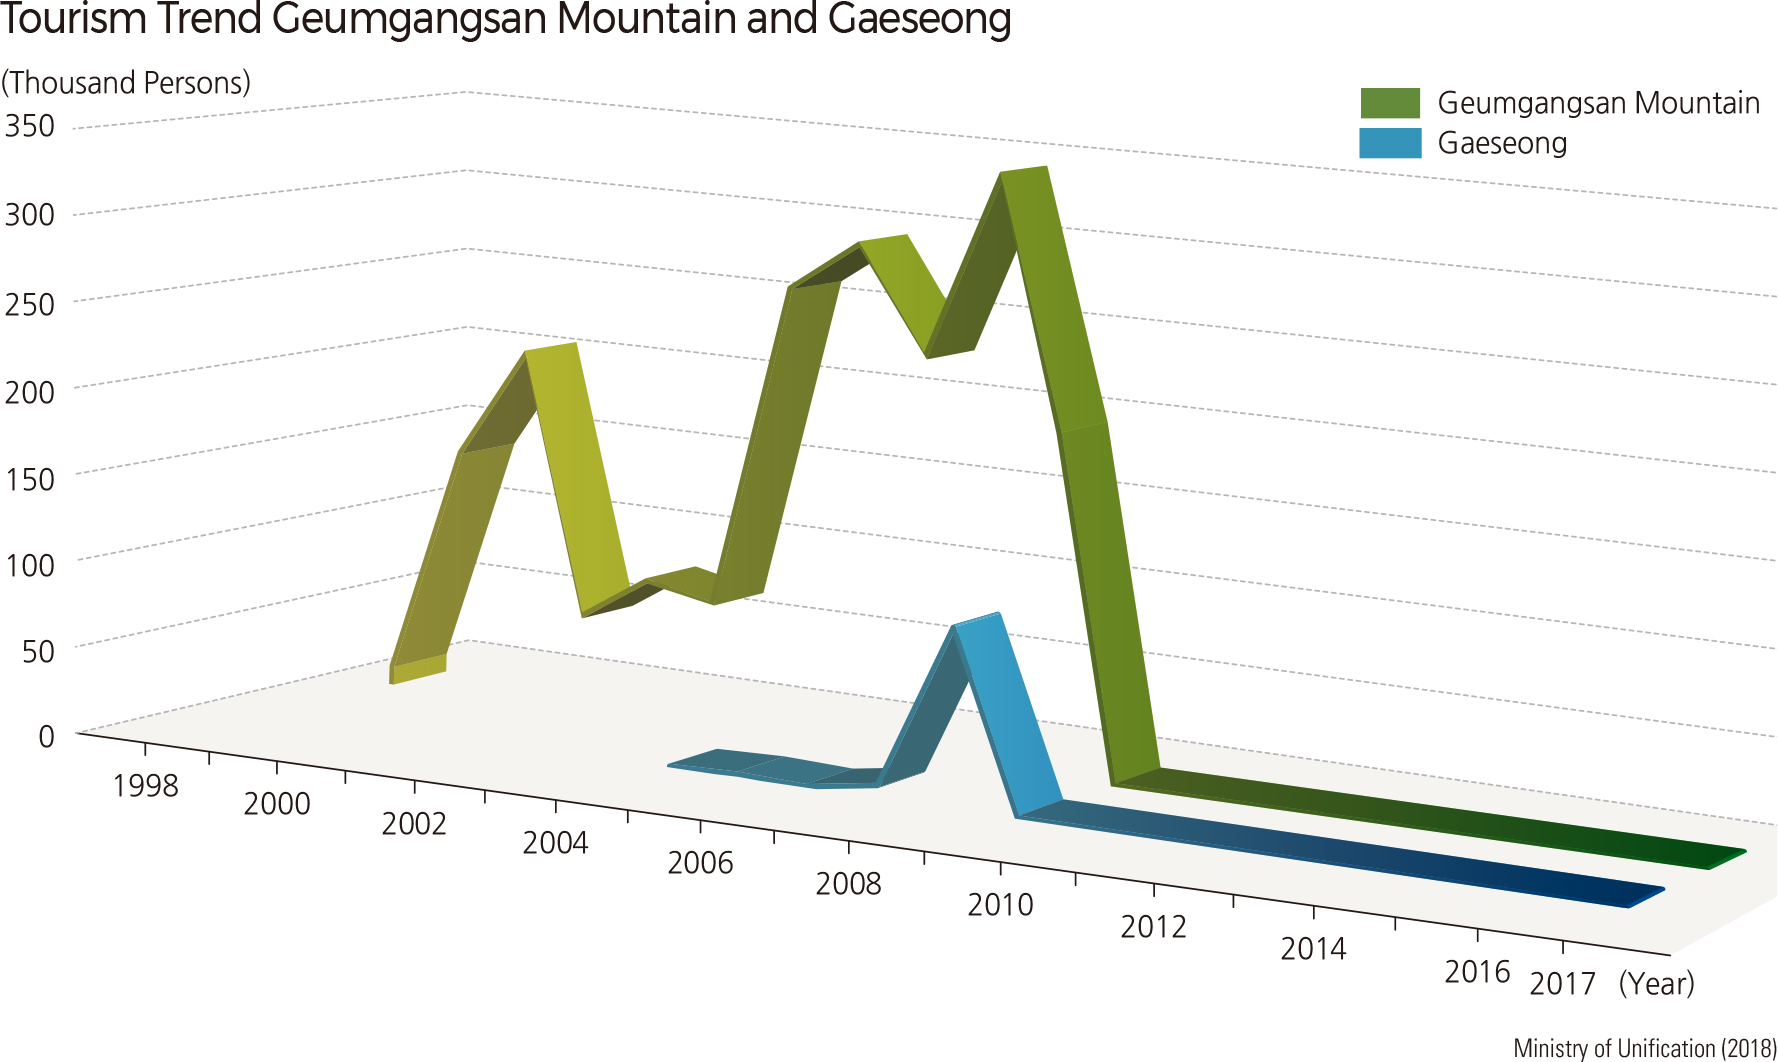 Tourism Trend Geumgangsan Mountain and Gaeseong